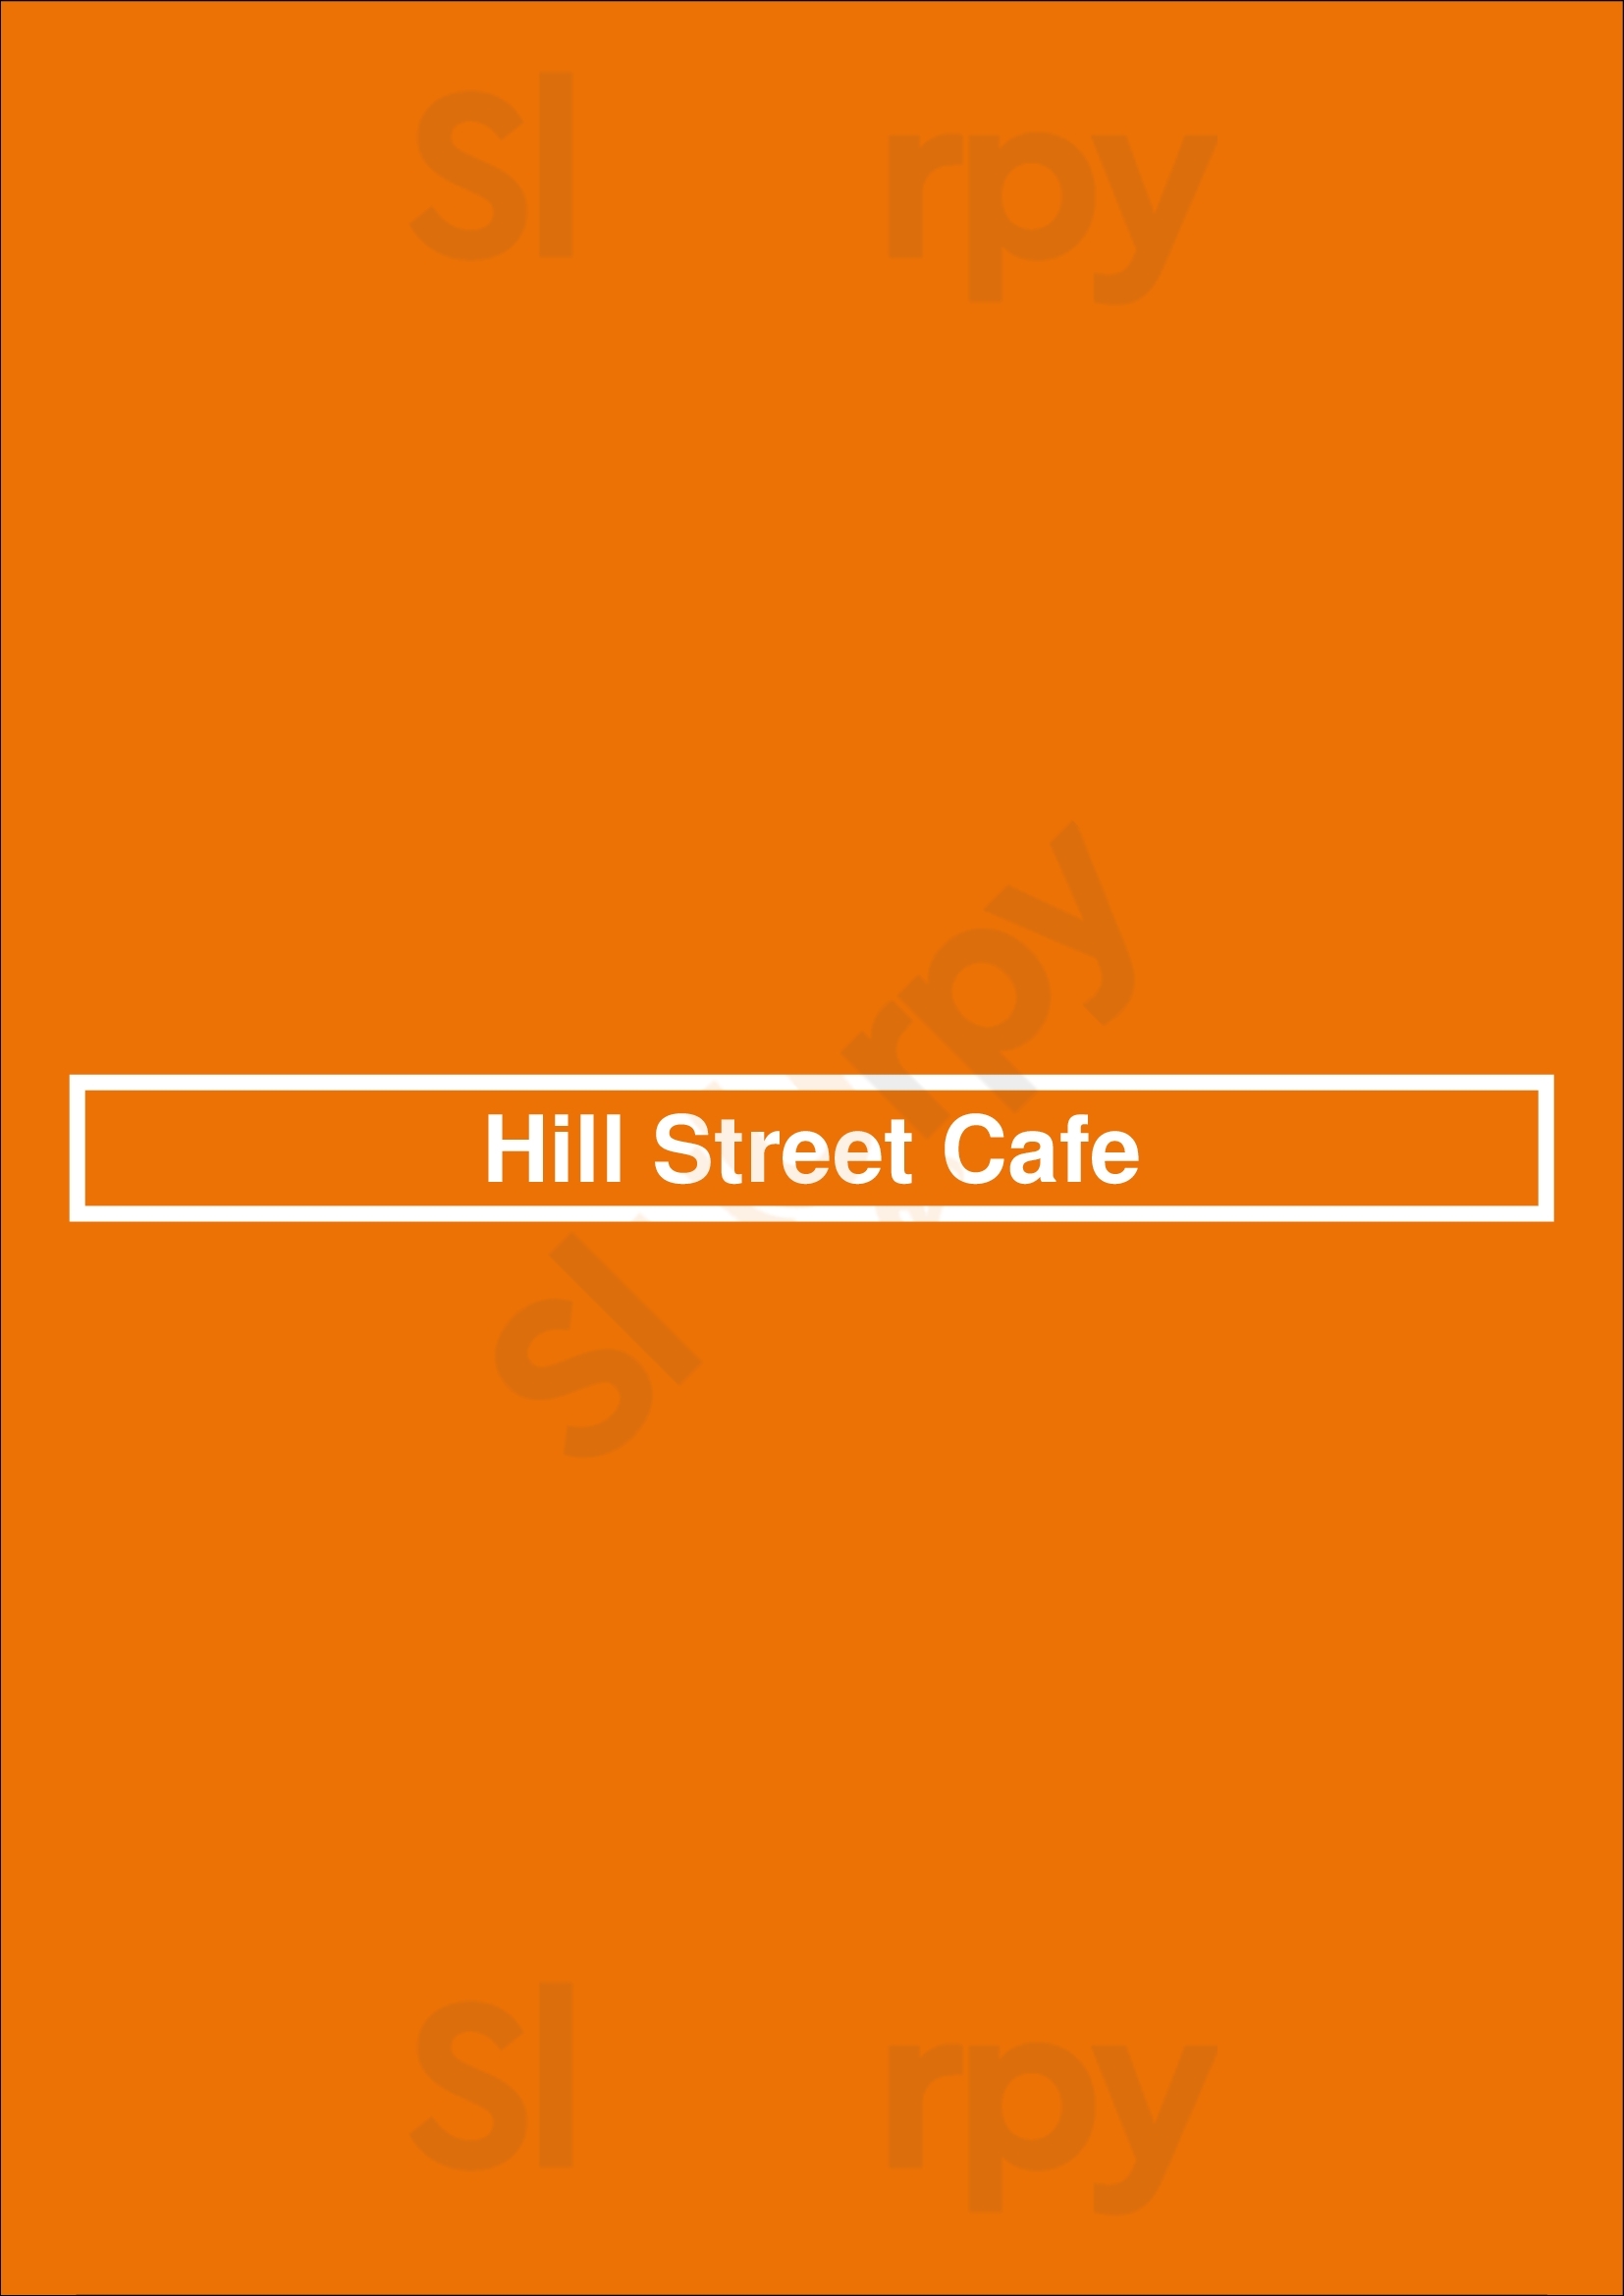 Hill Street Cafe Burbank Menu - 1